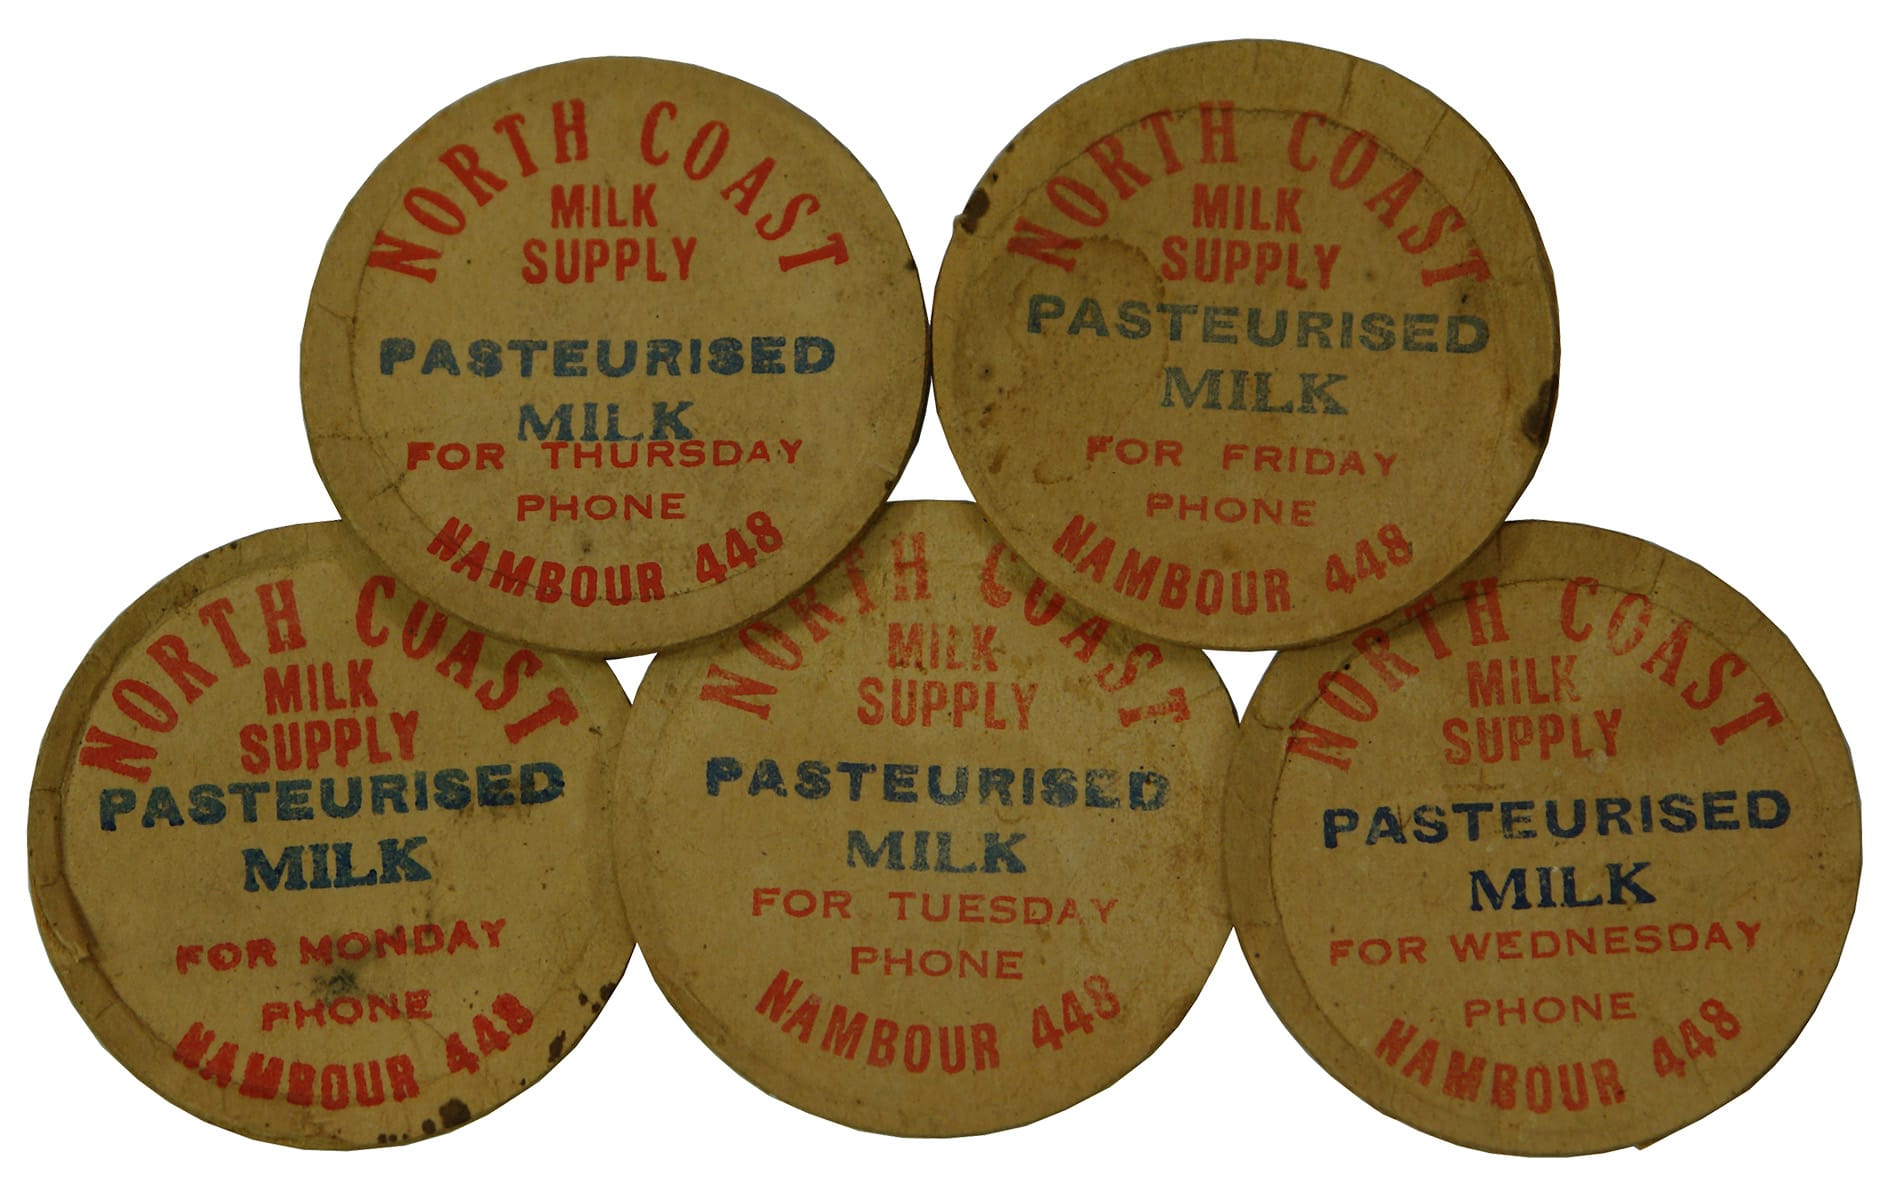 North Coast Milk Supply Nambour Cardboard Wads